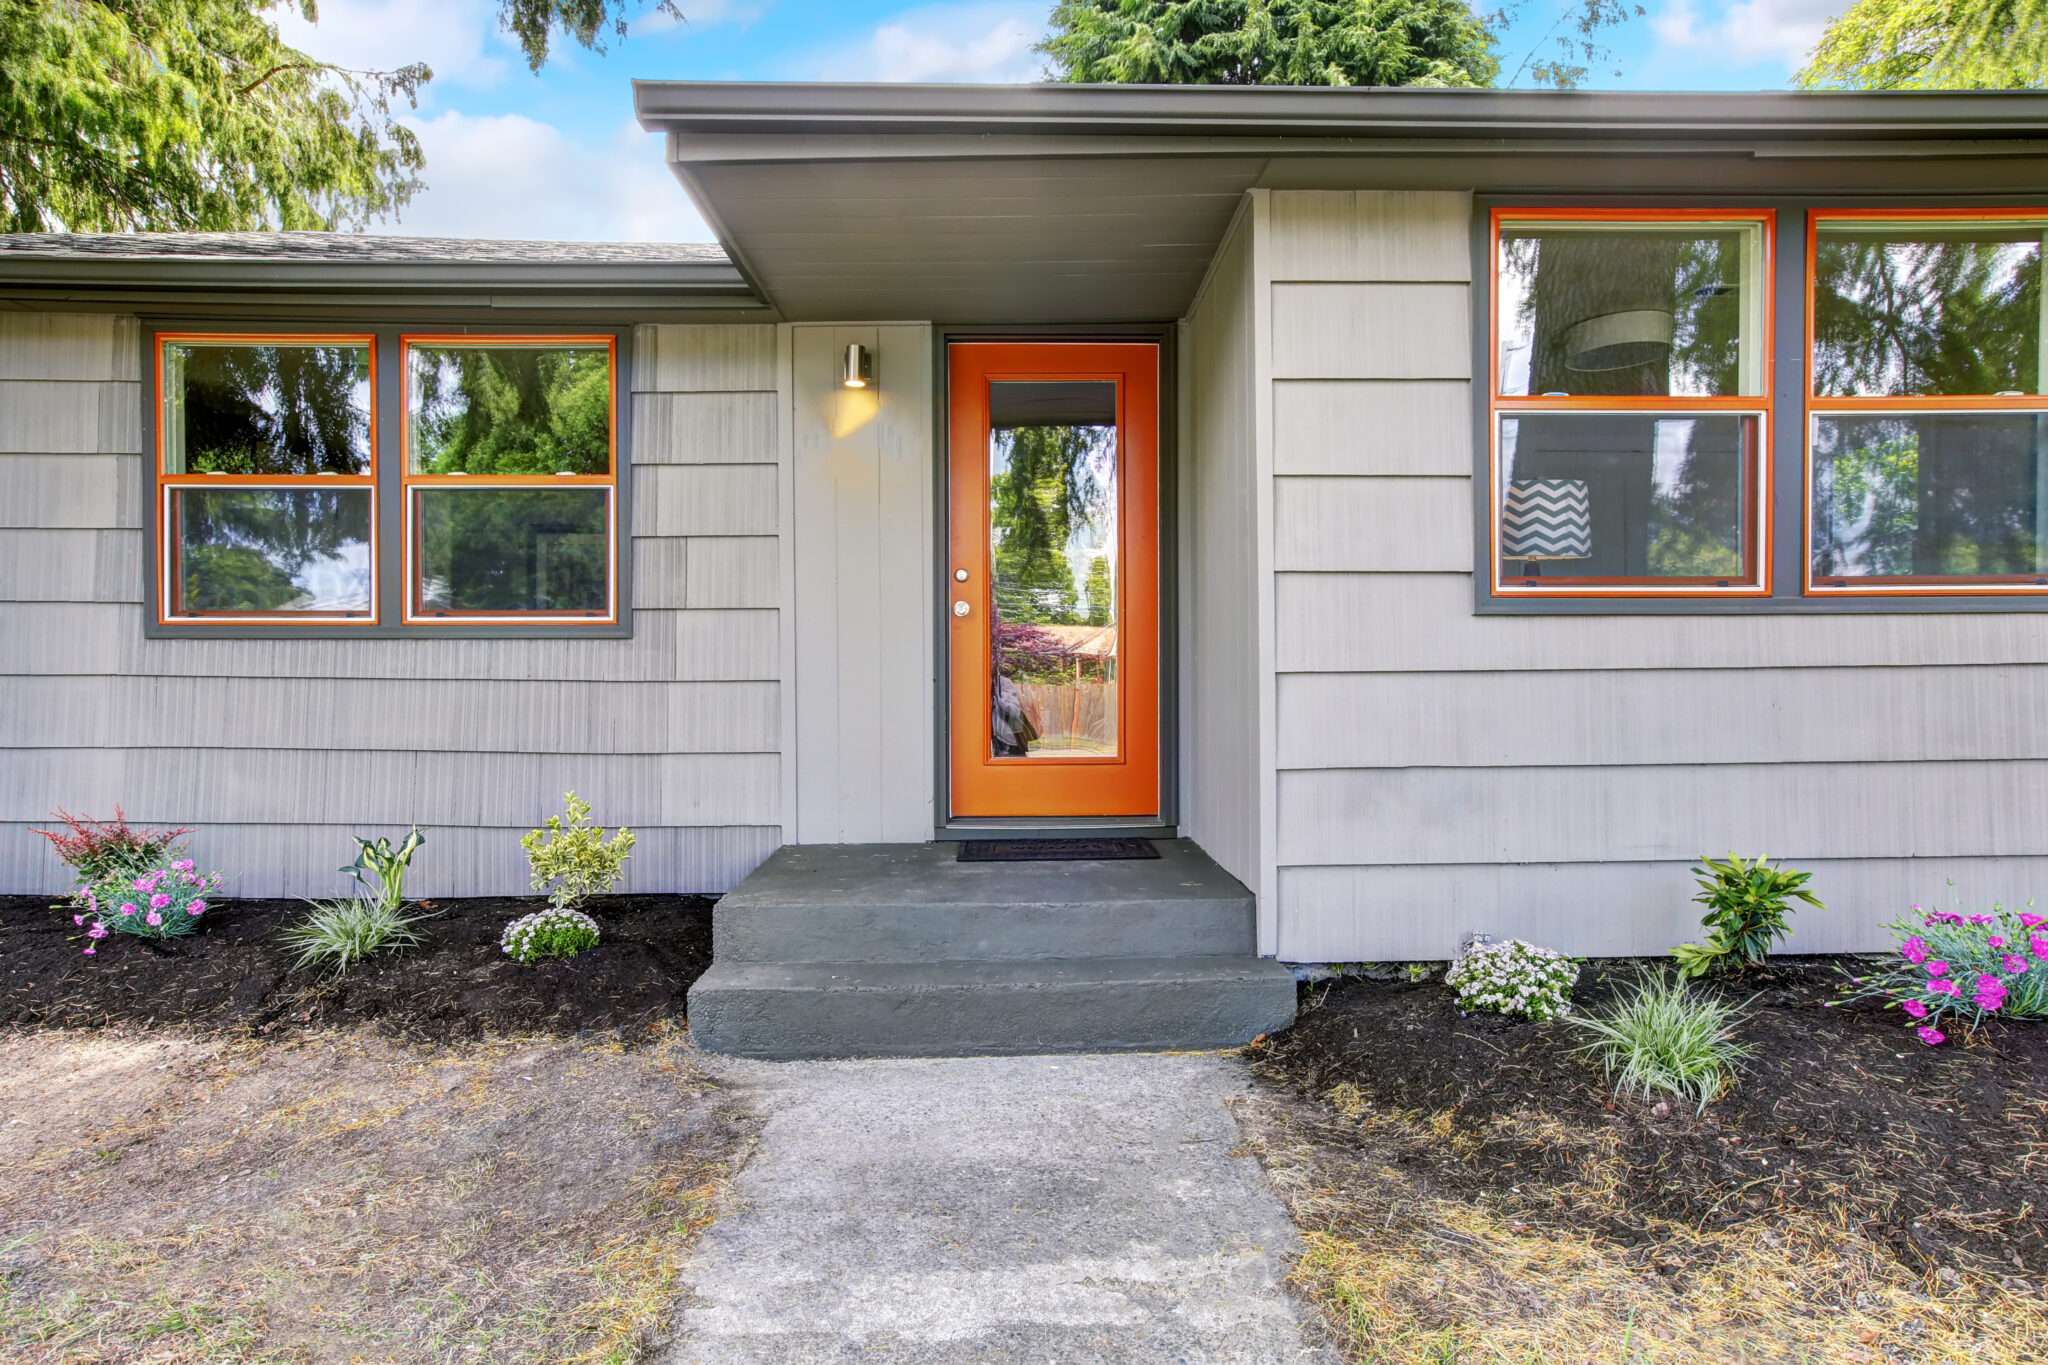 Orange framed windows and door on gray house